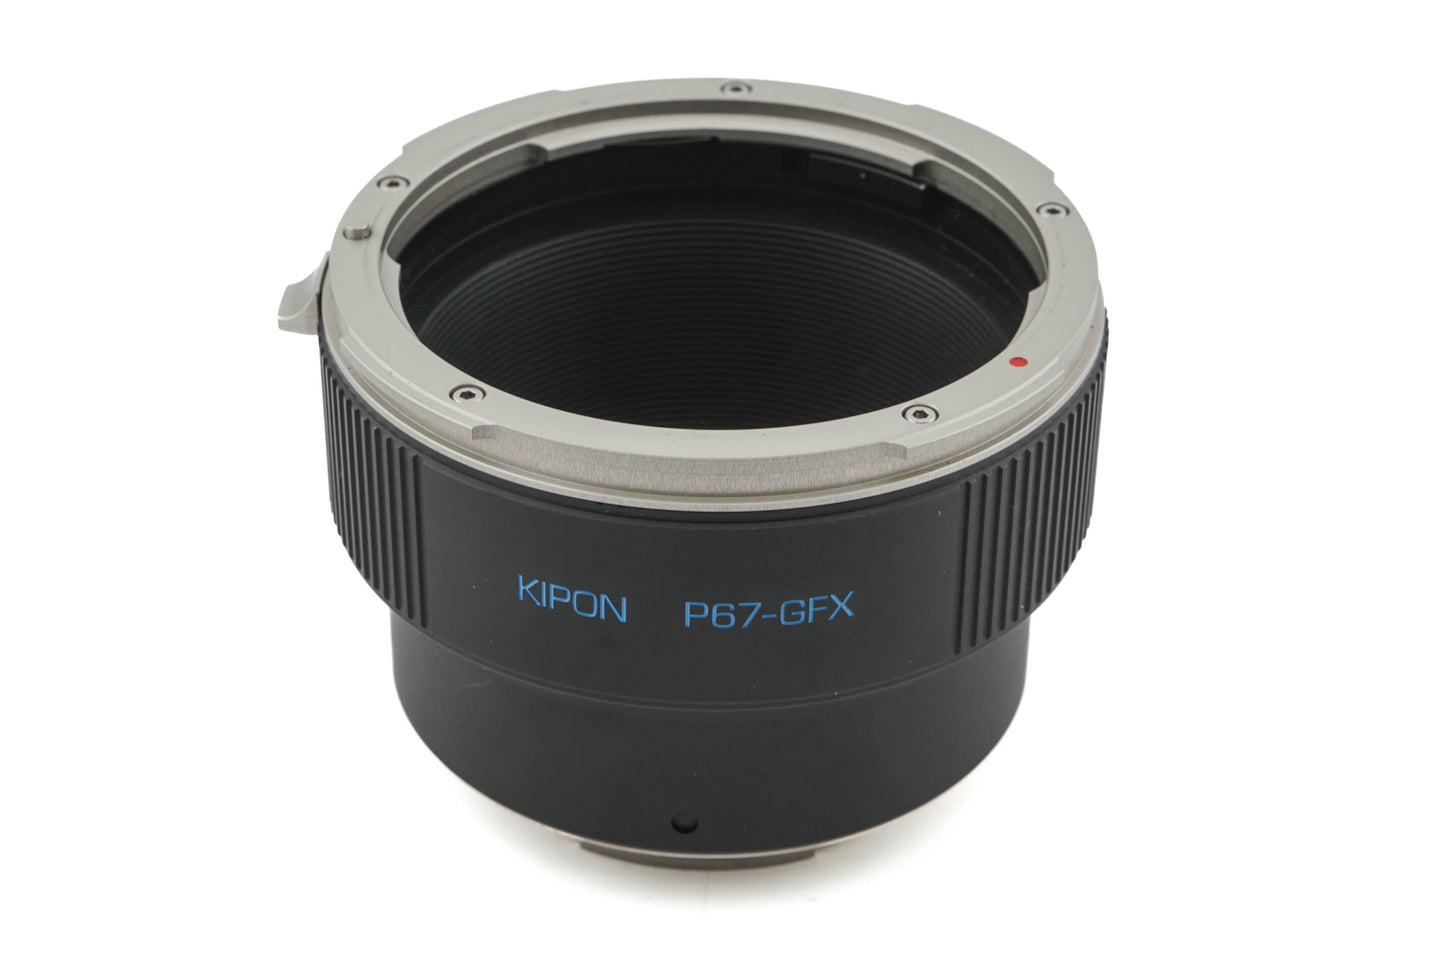 Kipon Pentax 6x7 - Fuji GFX (P67-GFX) Adapter - Lens Adapter